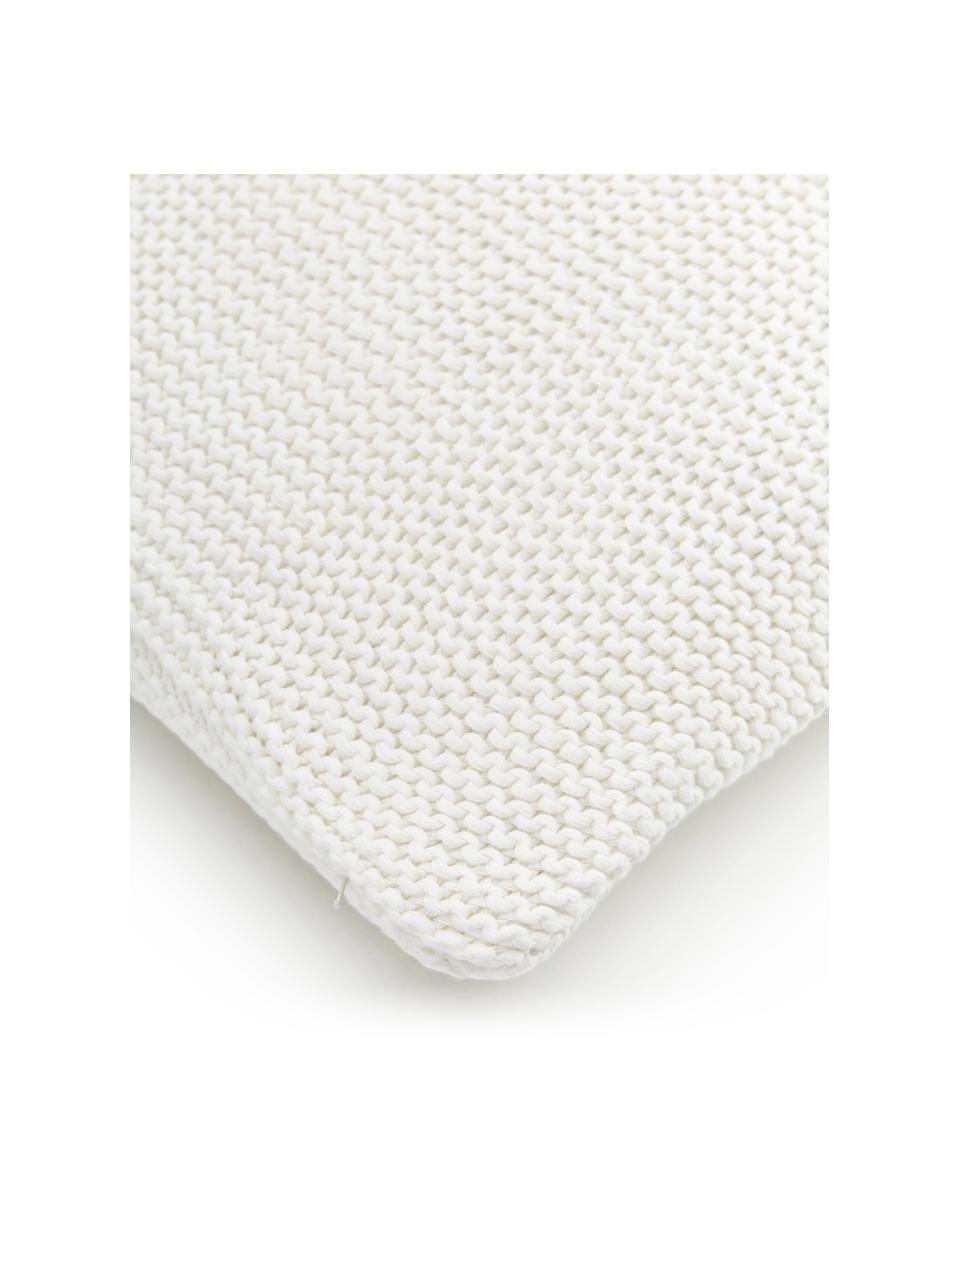 Strick-Kissenhülle Adalyn, 100% Bio-Baumwolle, GOTS-zertifiziert, Weiß, B 40 x L 60 cm